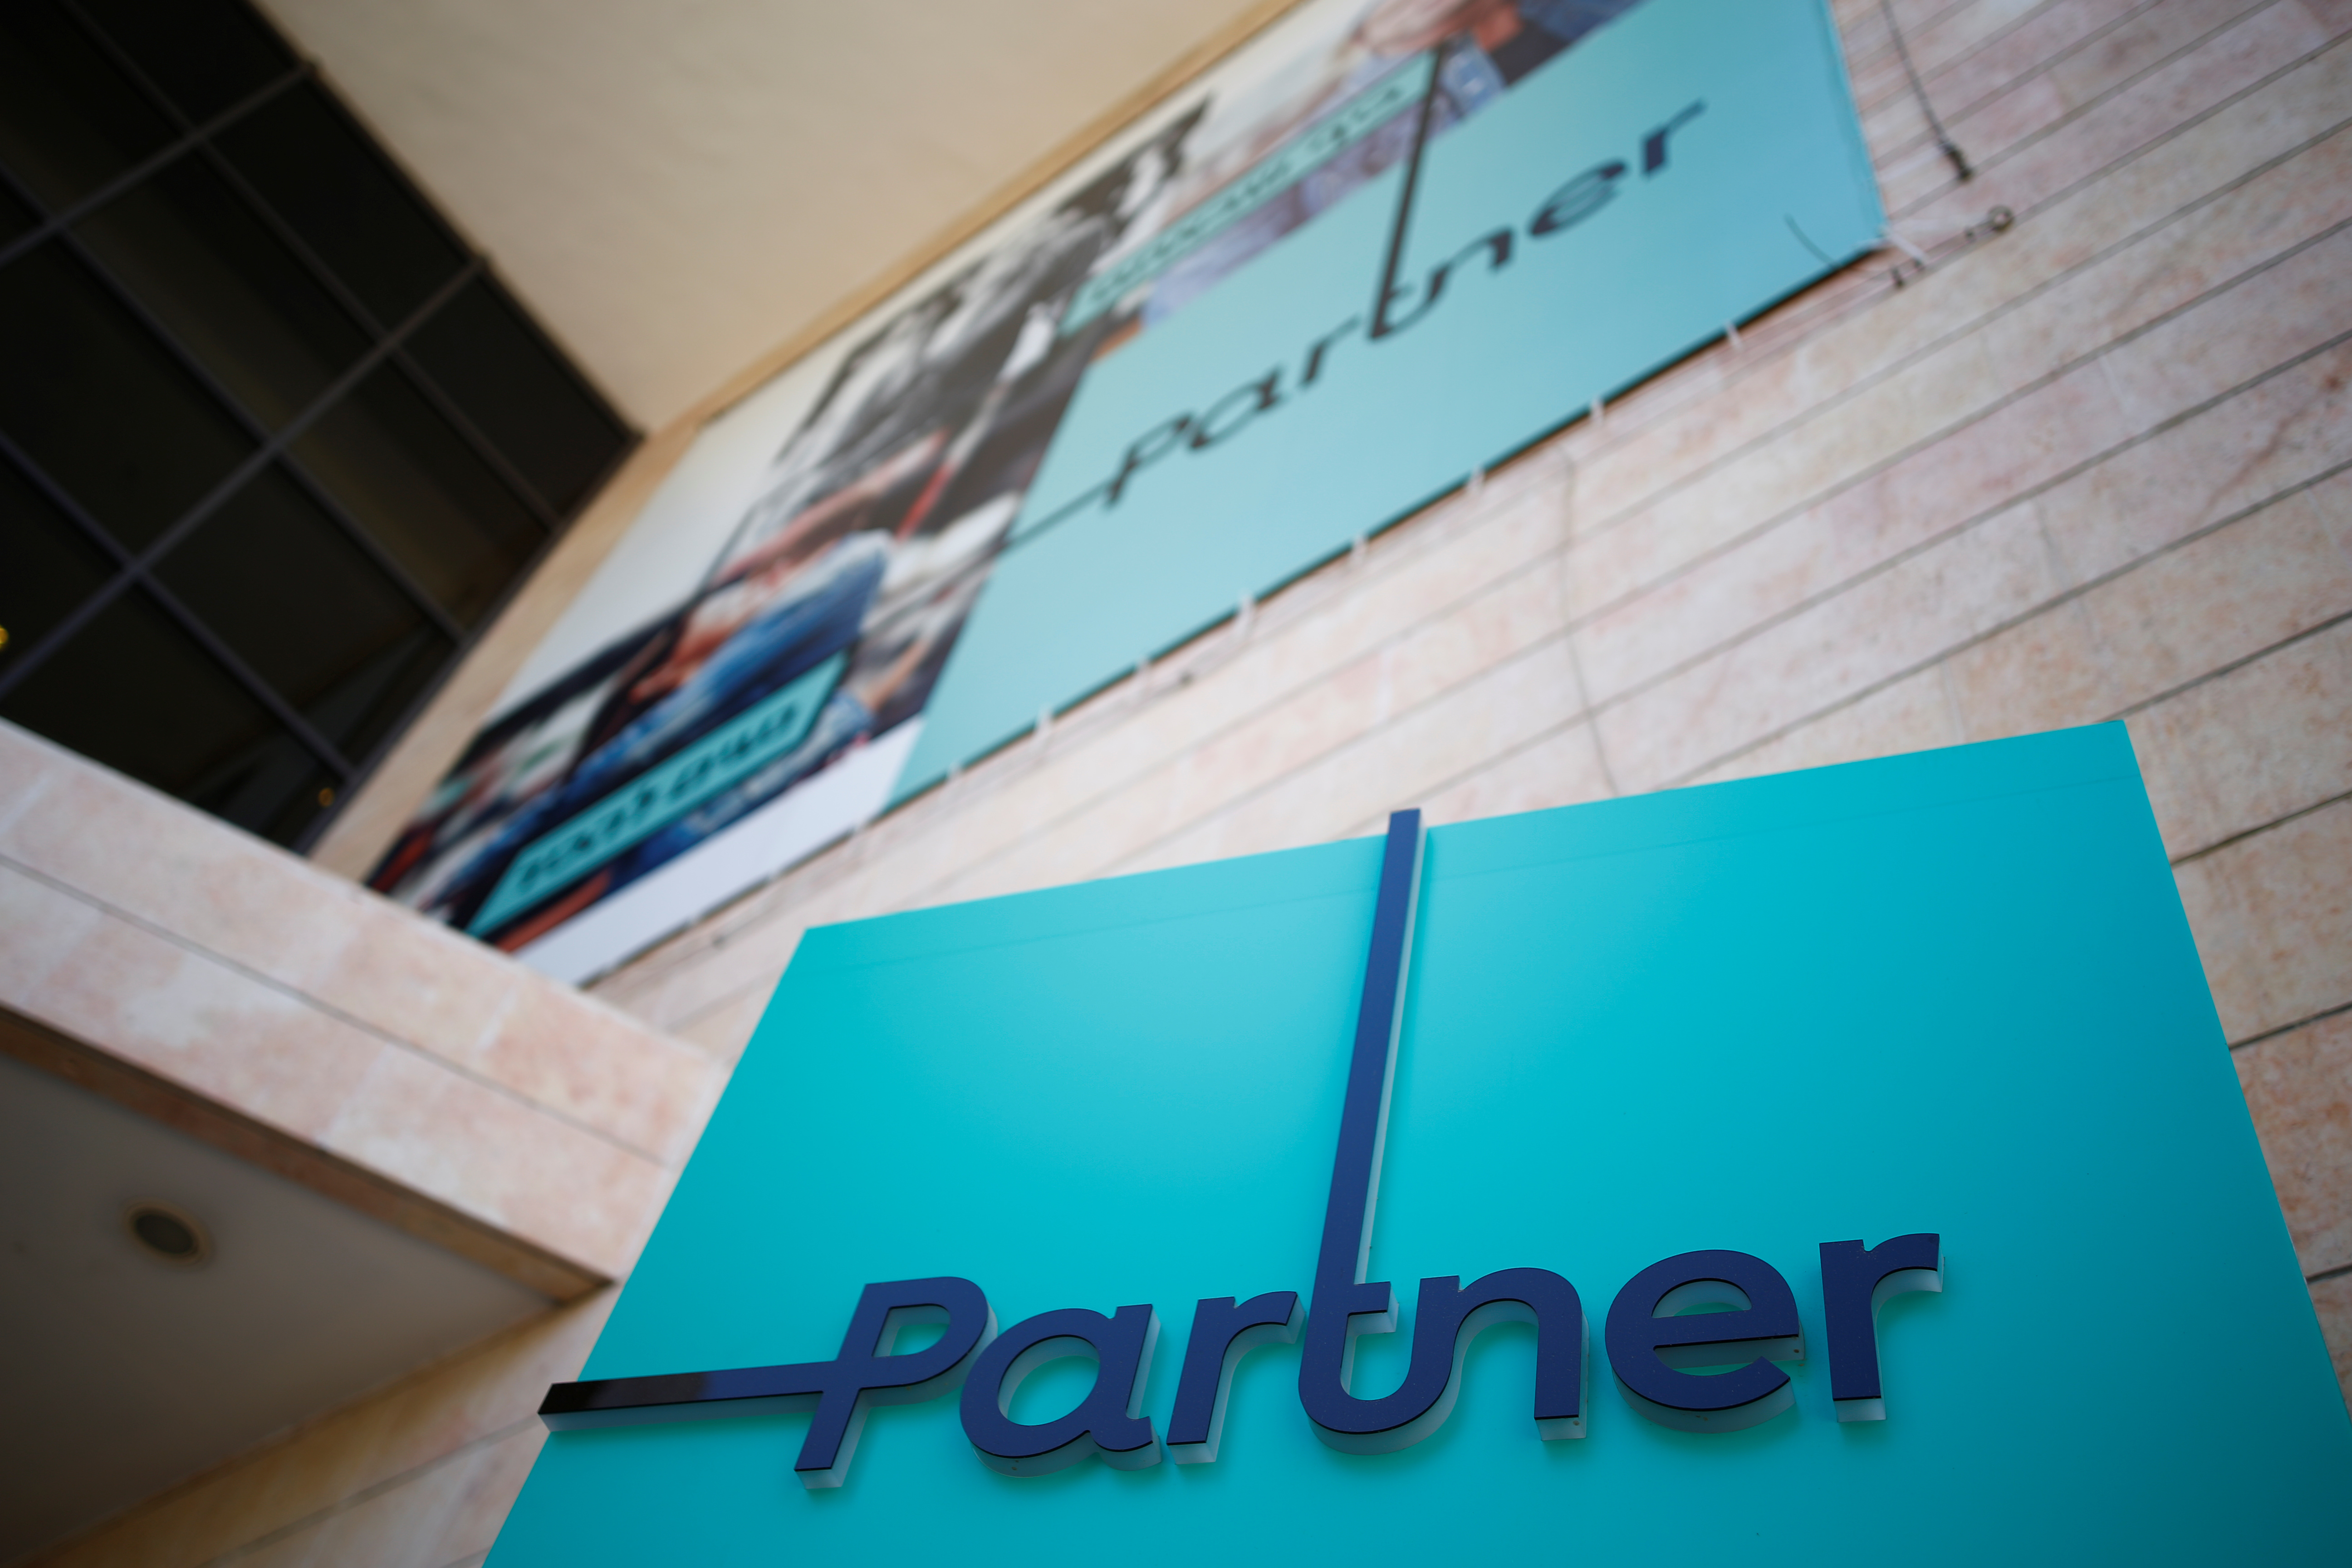 The logo of Partner, an Israeli communication firm, is seen at their headquarters in Rosh Ha'ayin near Tel Aviv, Israel